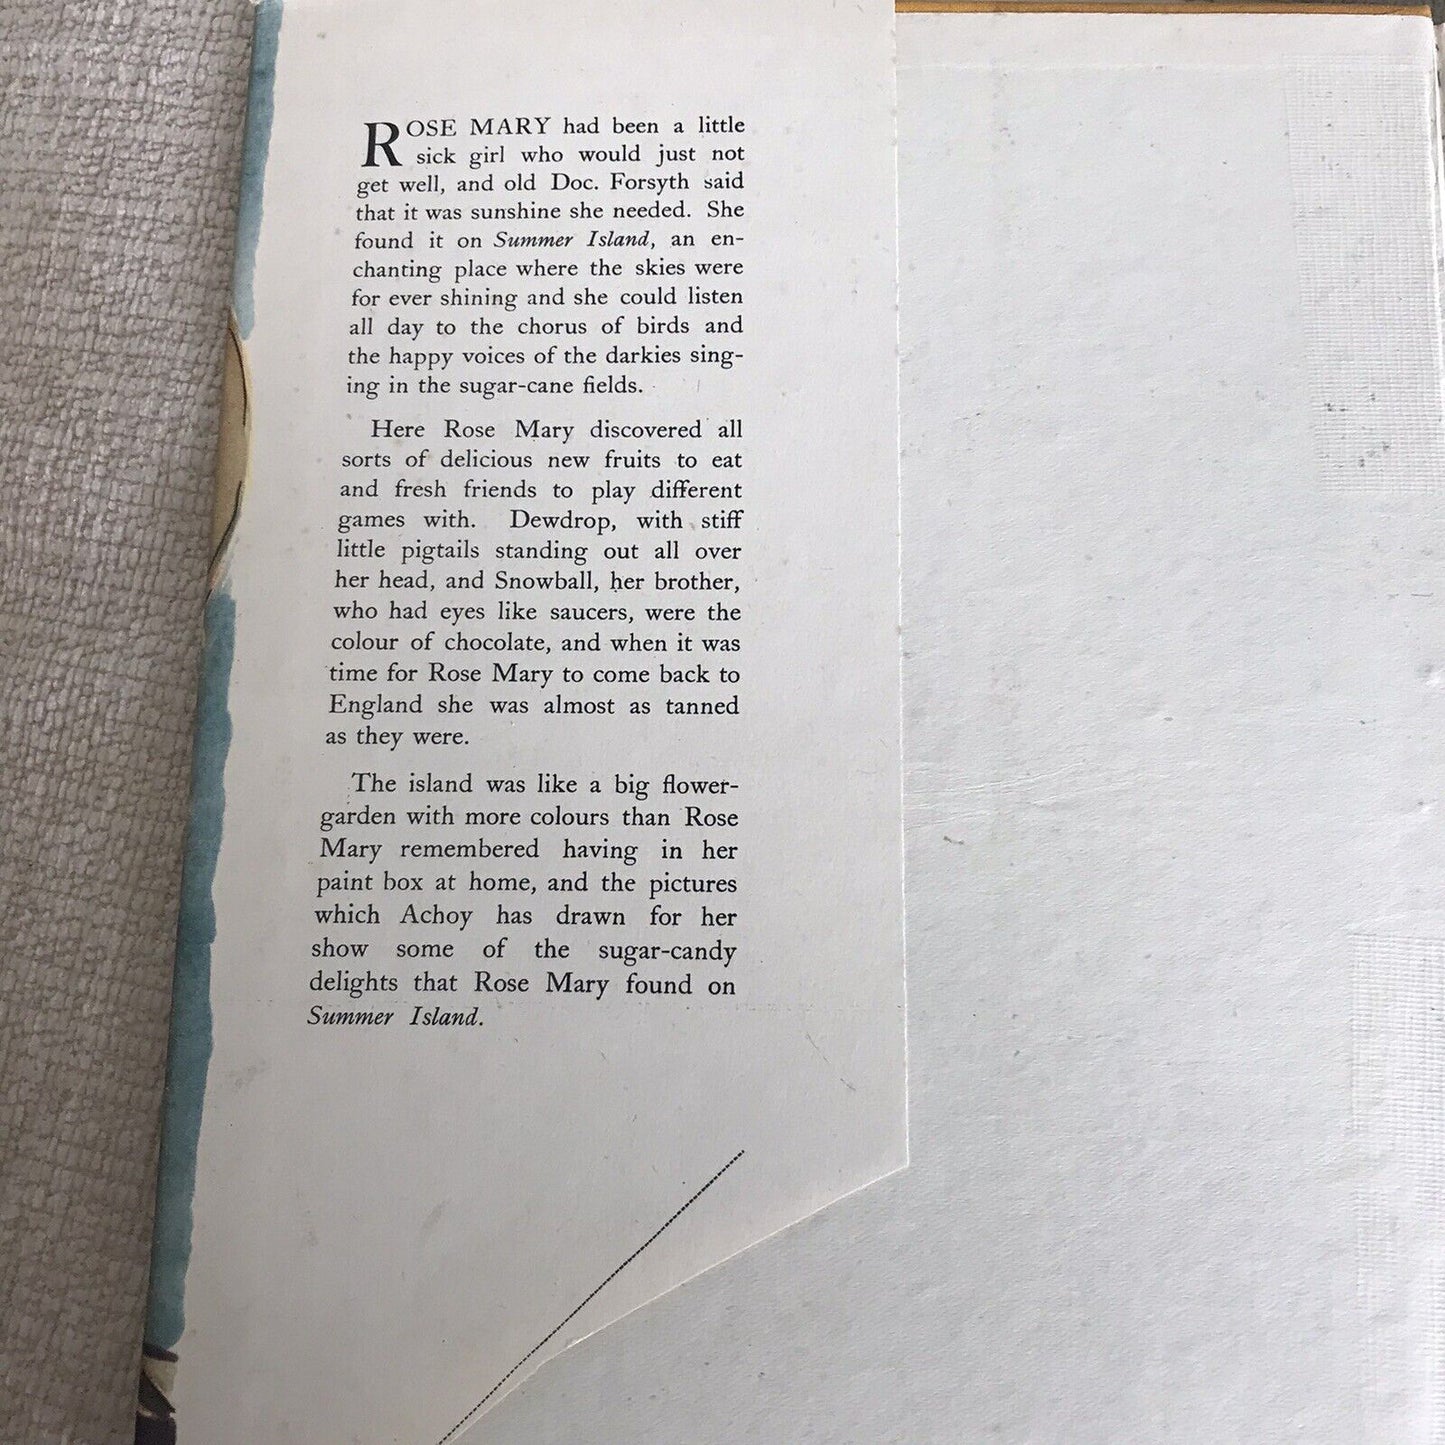 1944*1st* Summer Island - Renee Sidney(Achoy Illust) Lutterworth Press Honeyburn Books (UK)